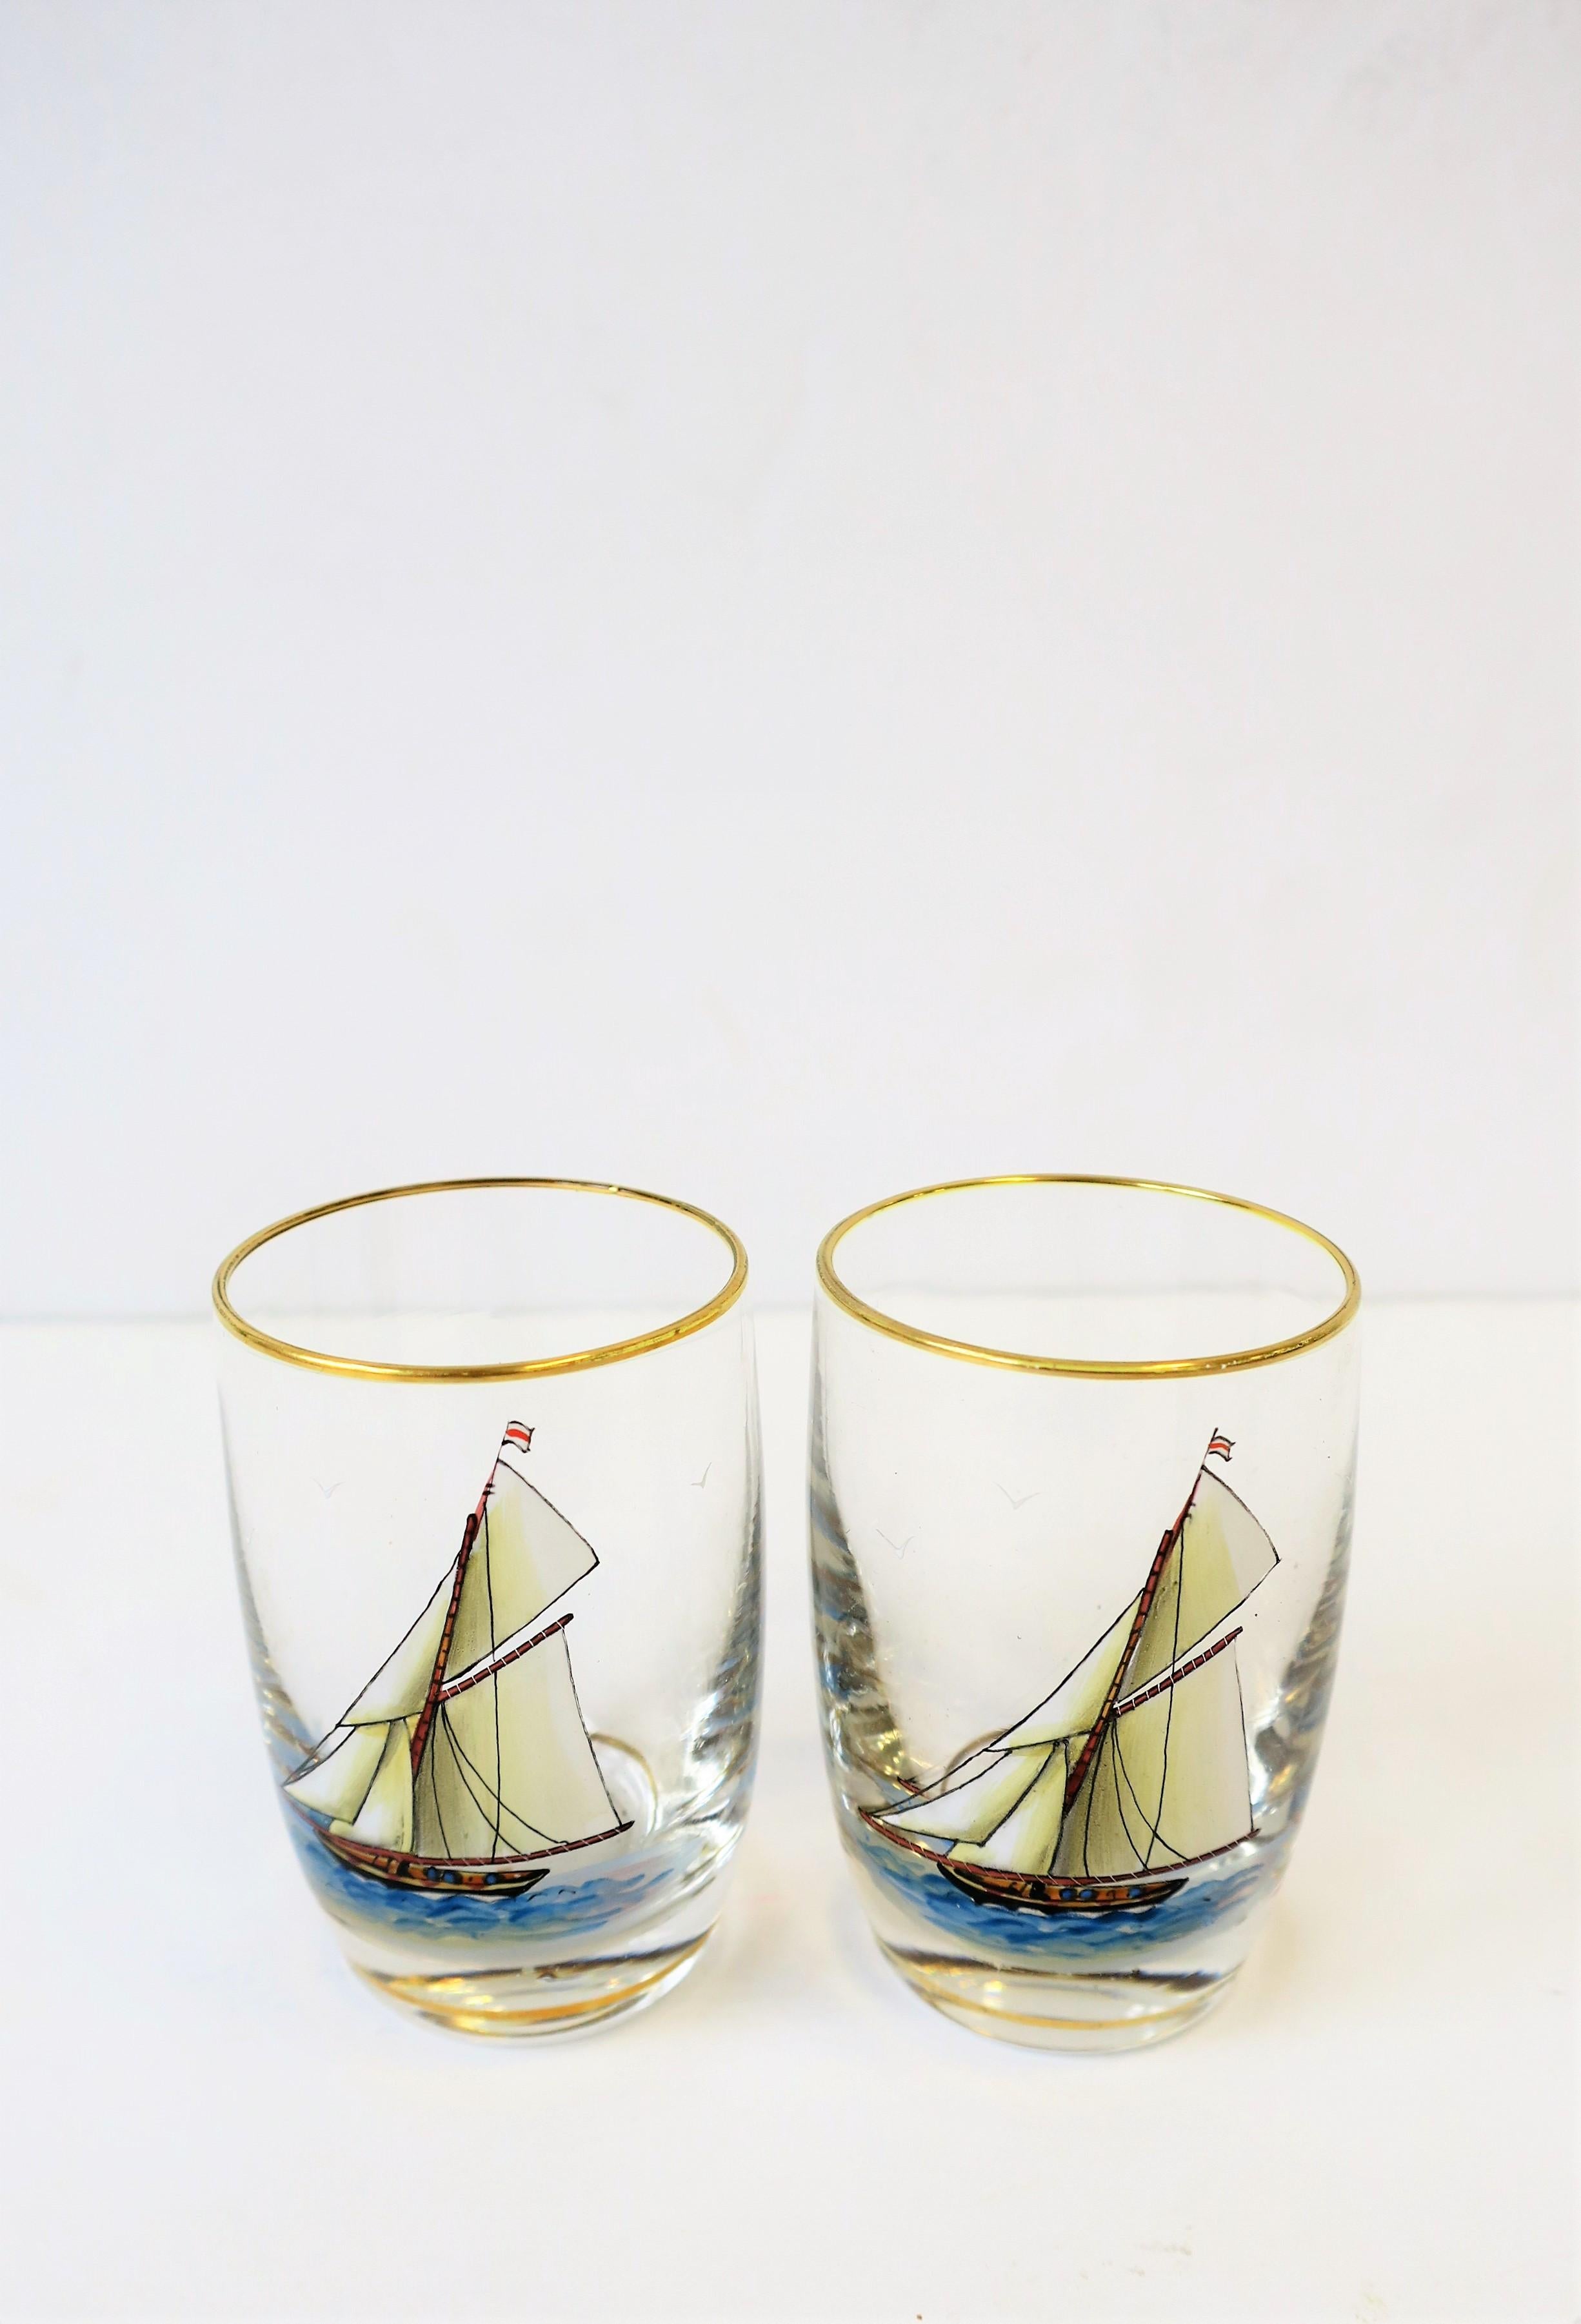 American Midcentury Nautical Apperitif or Shot Glasses